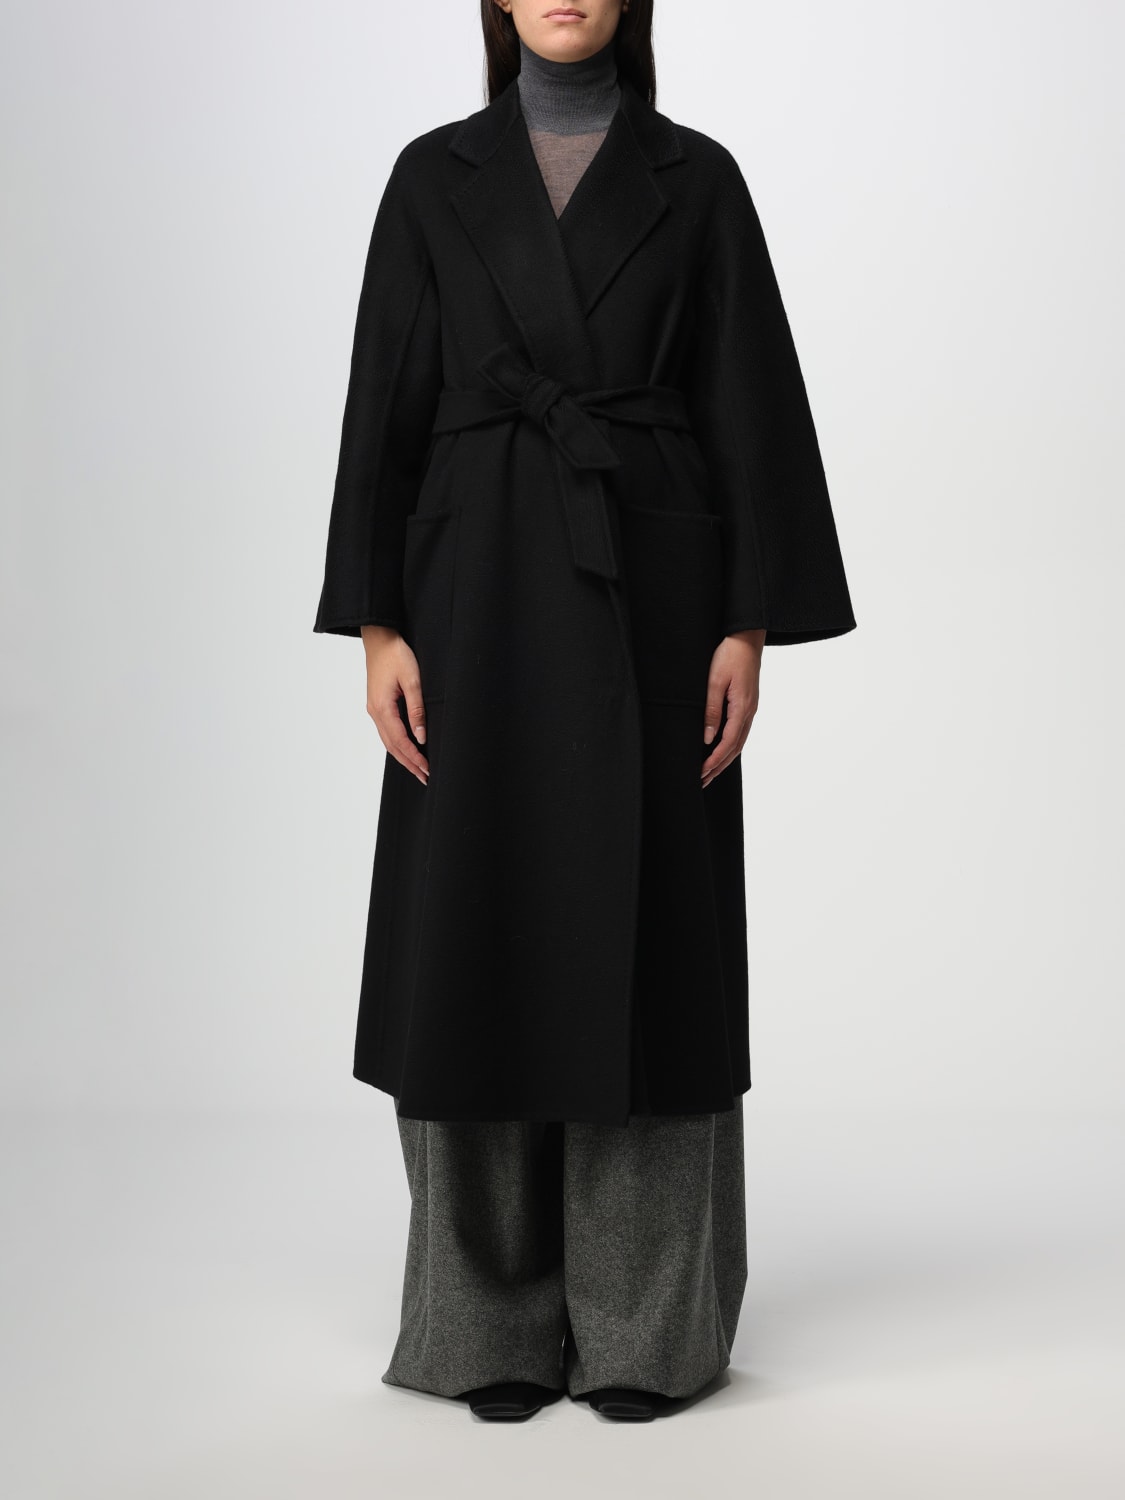 MAX MARA: Ludmilla coat in cashmere - Black | Max Mara coat ...